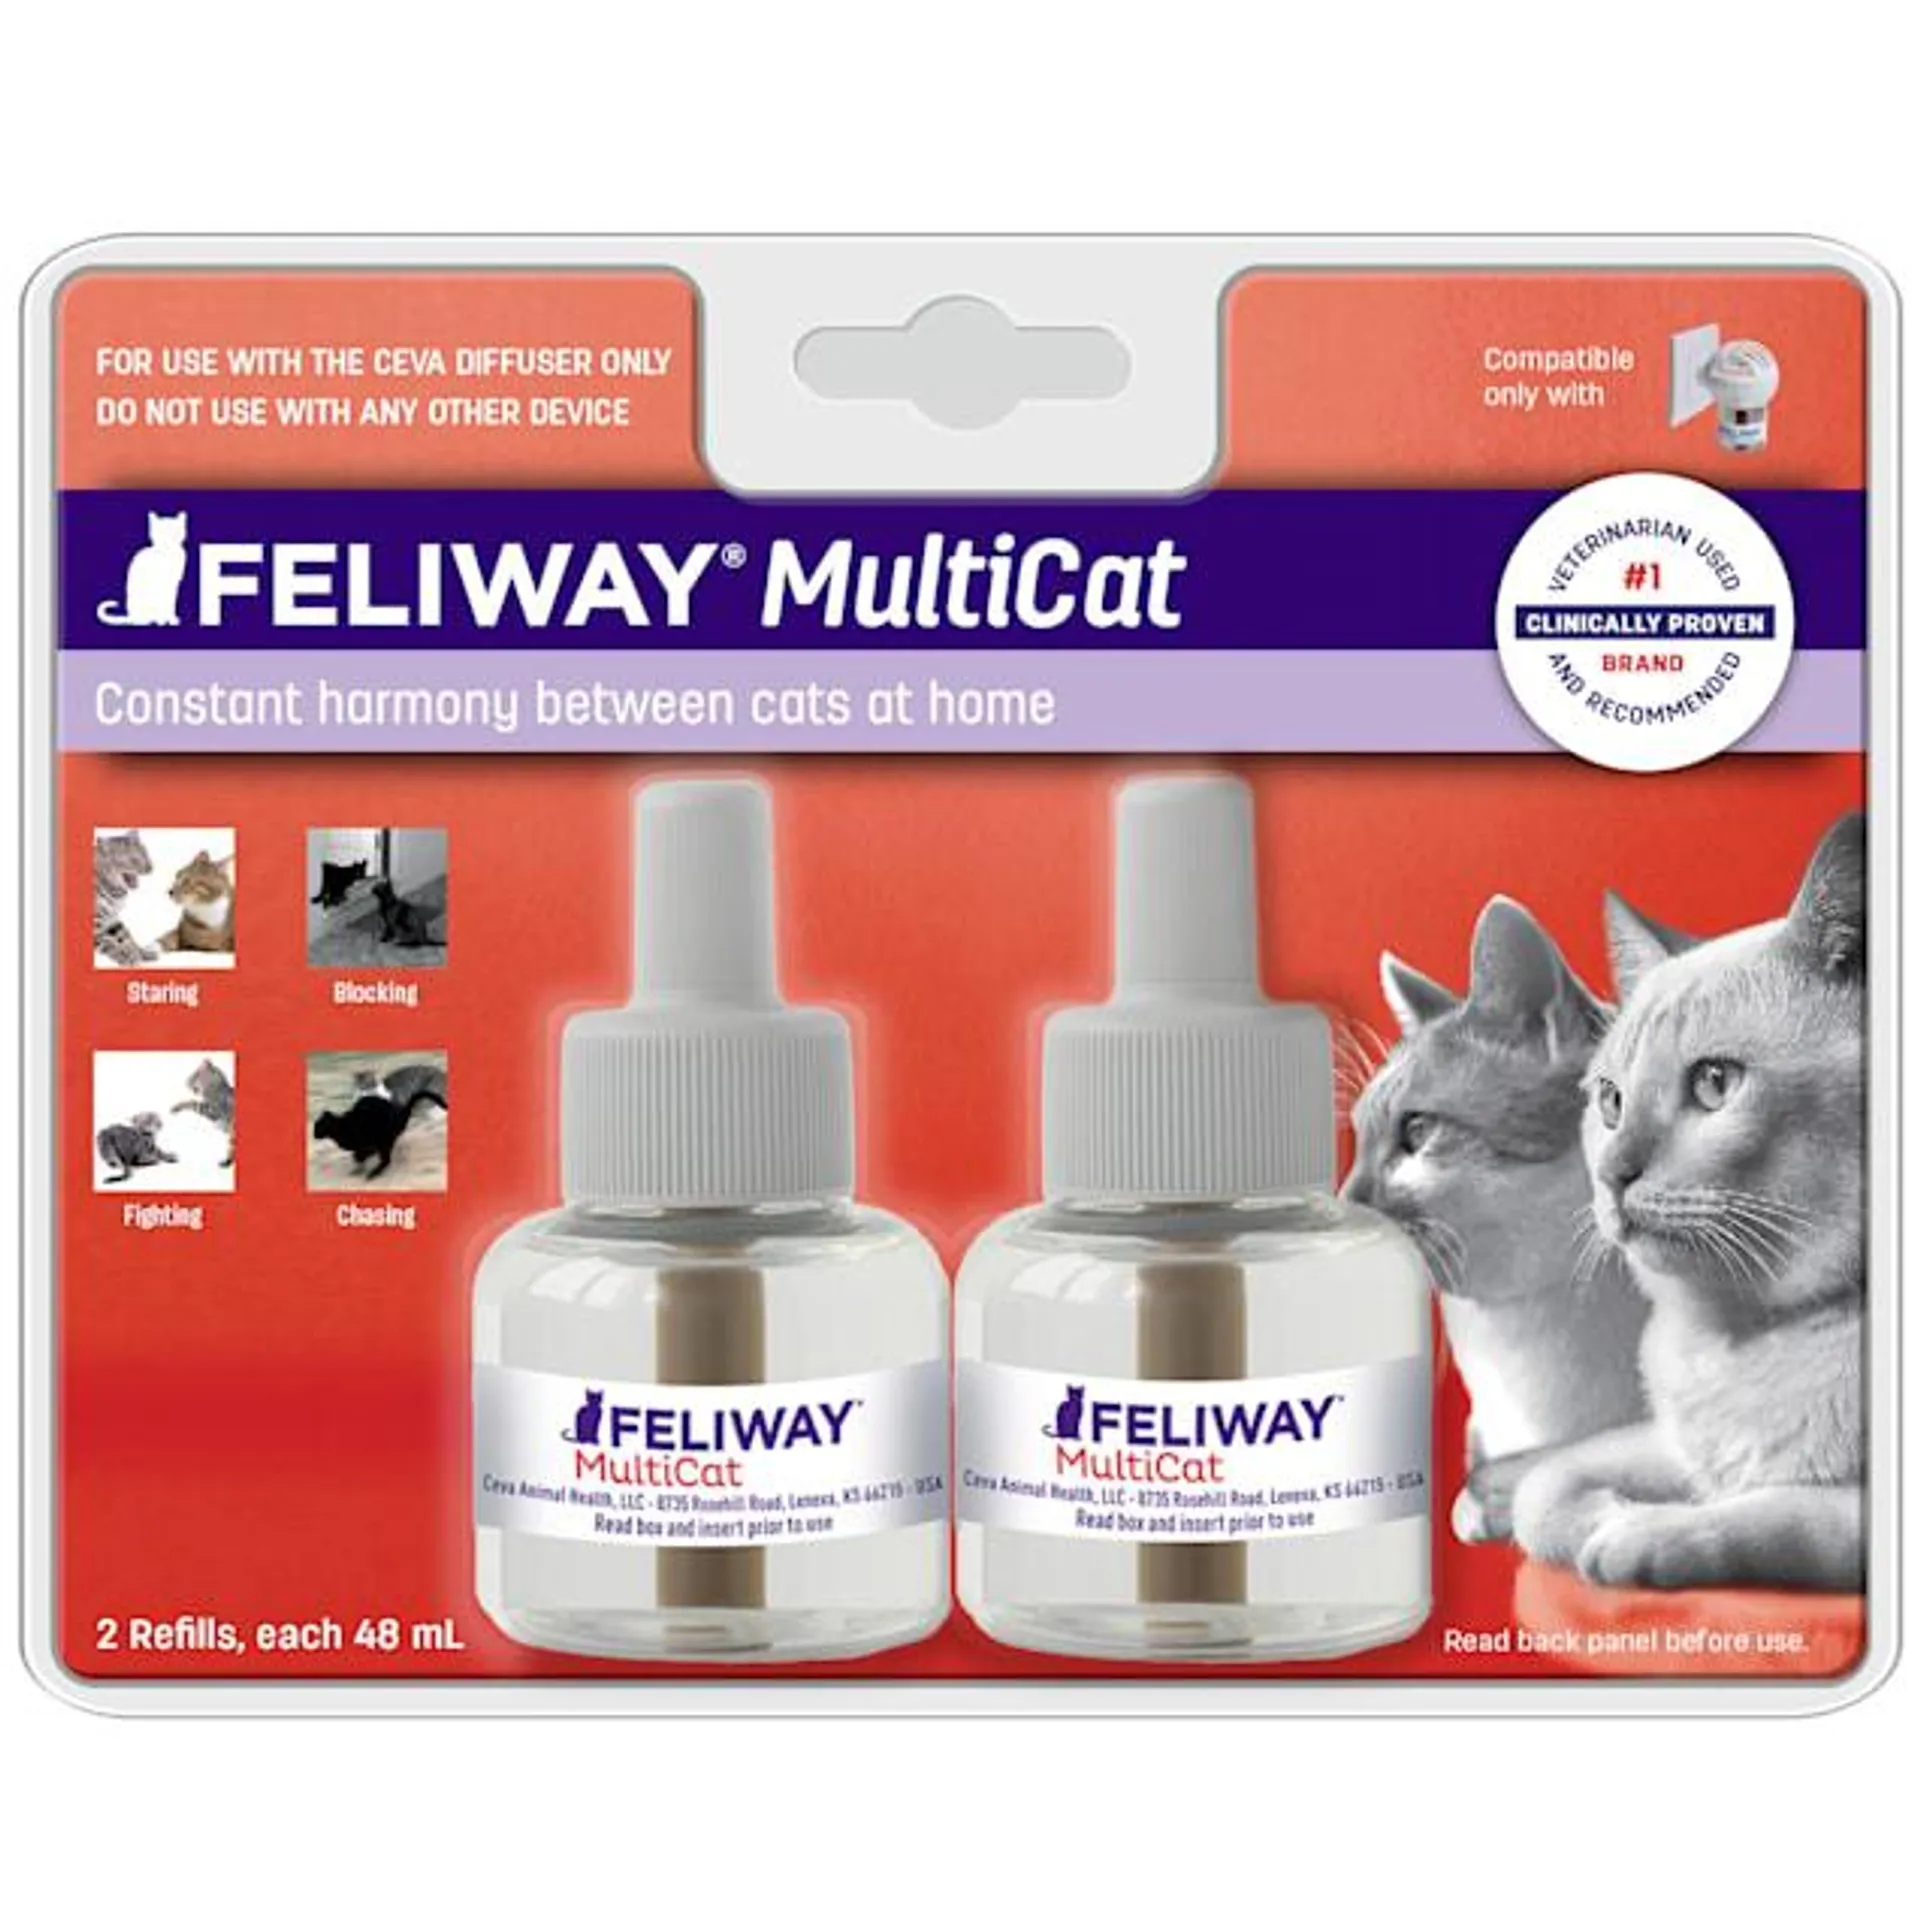 Feliway Multicat 30 Day Diffuser Refill, Pack of 2